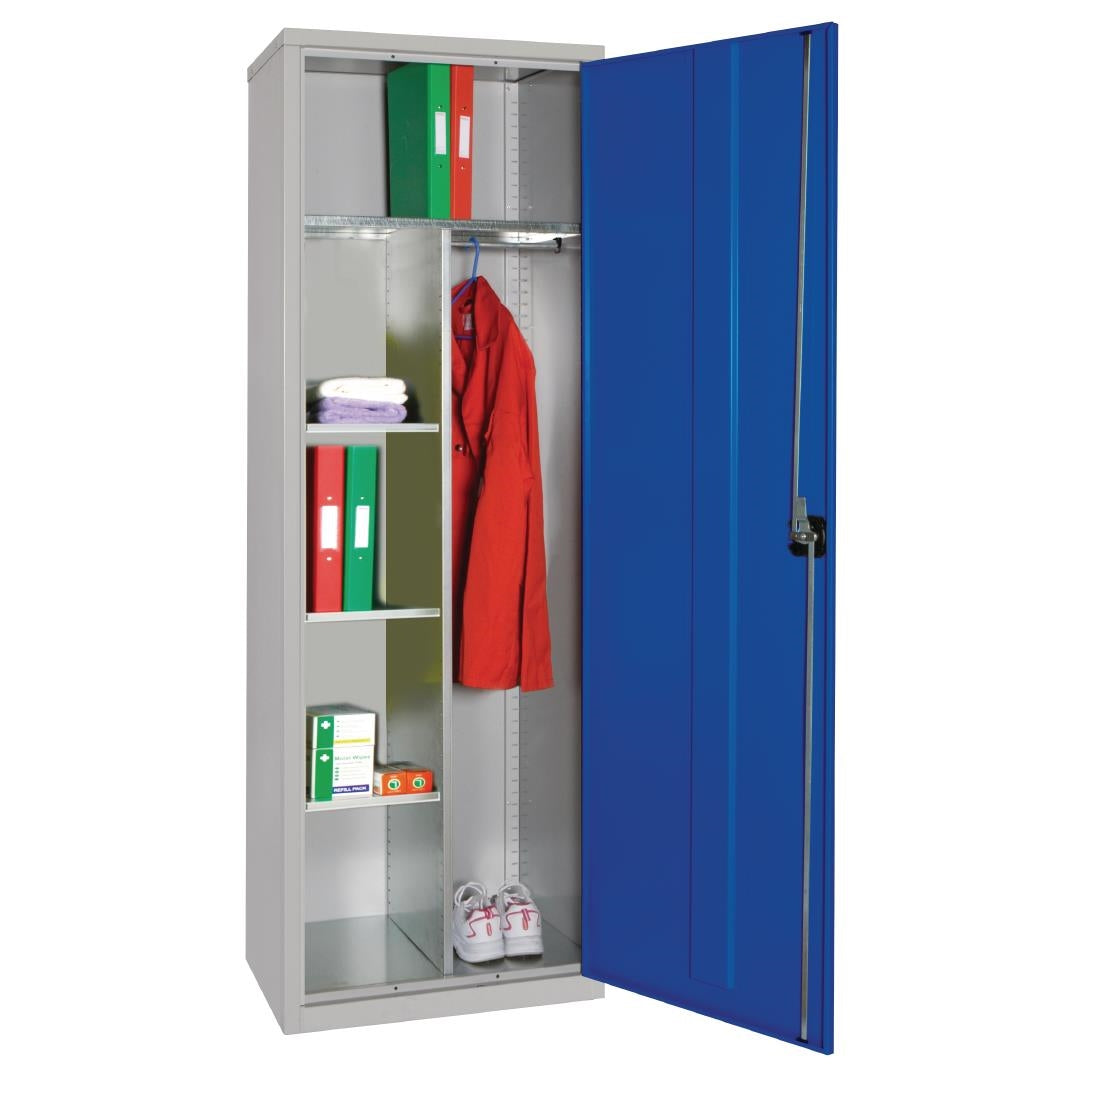 Clothing And Equipment Locker 610mm JD Catering Equipment Solutions Ltd